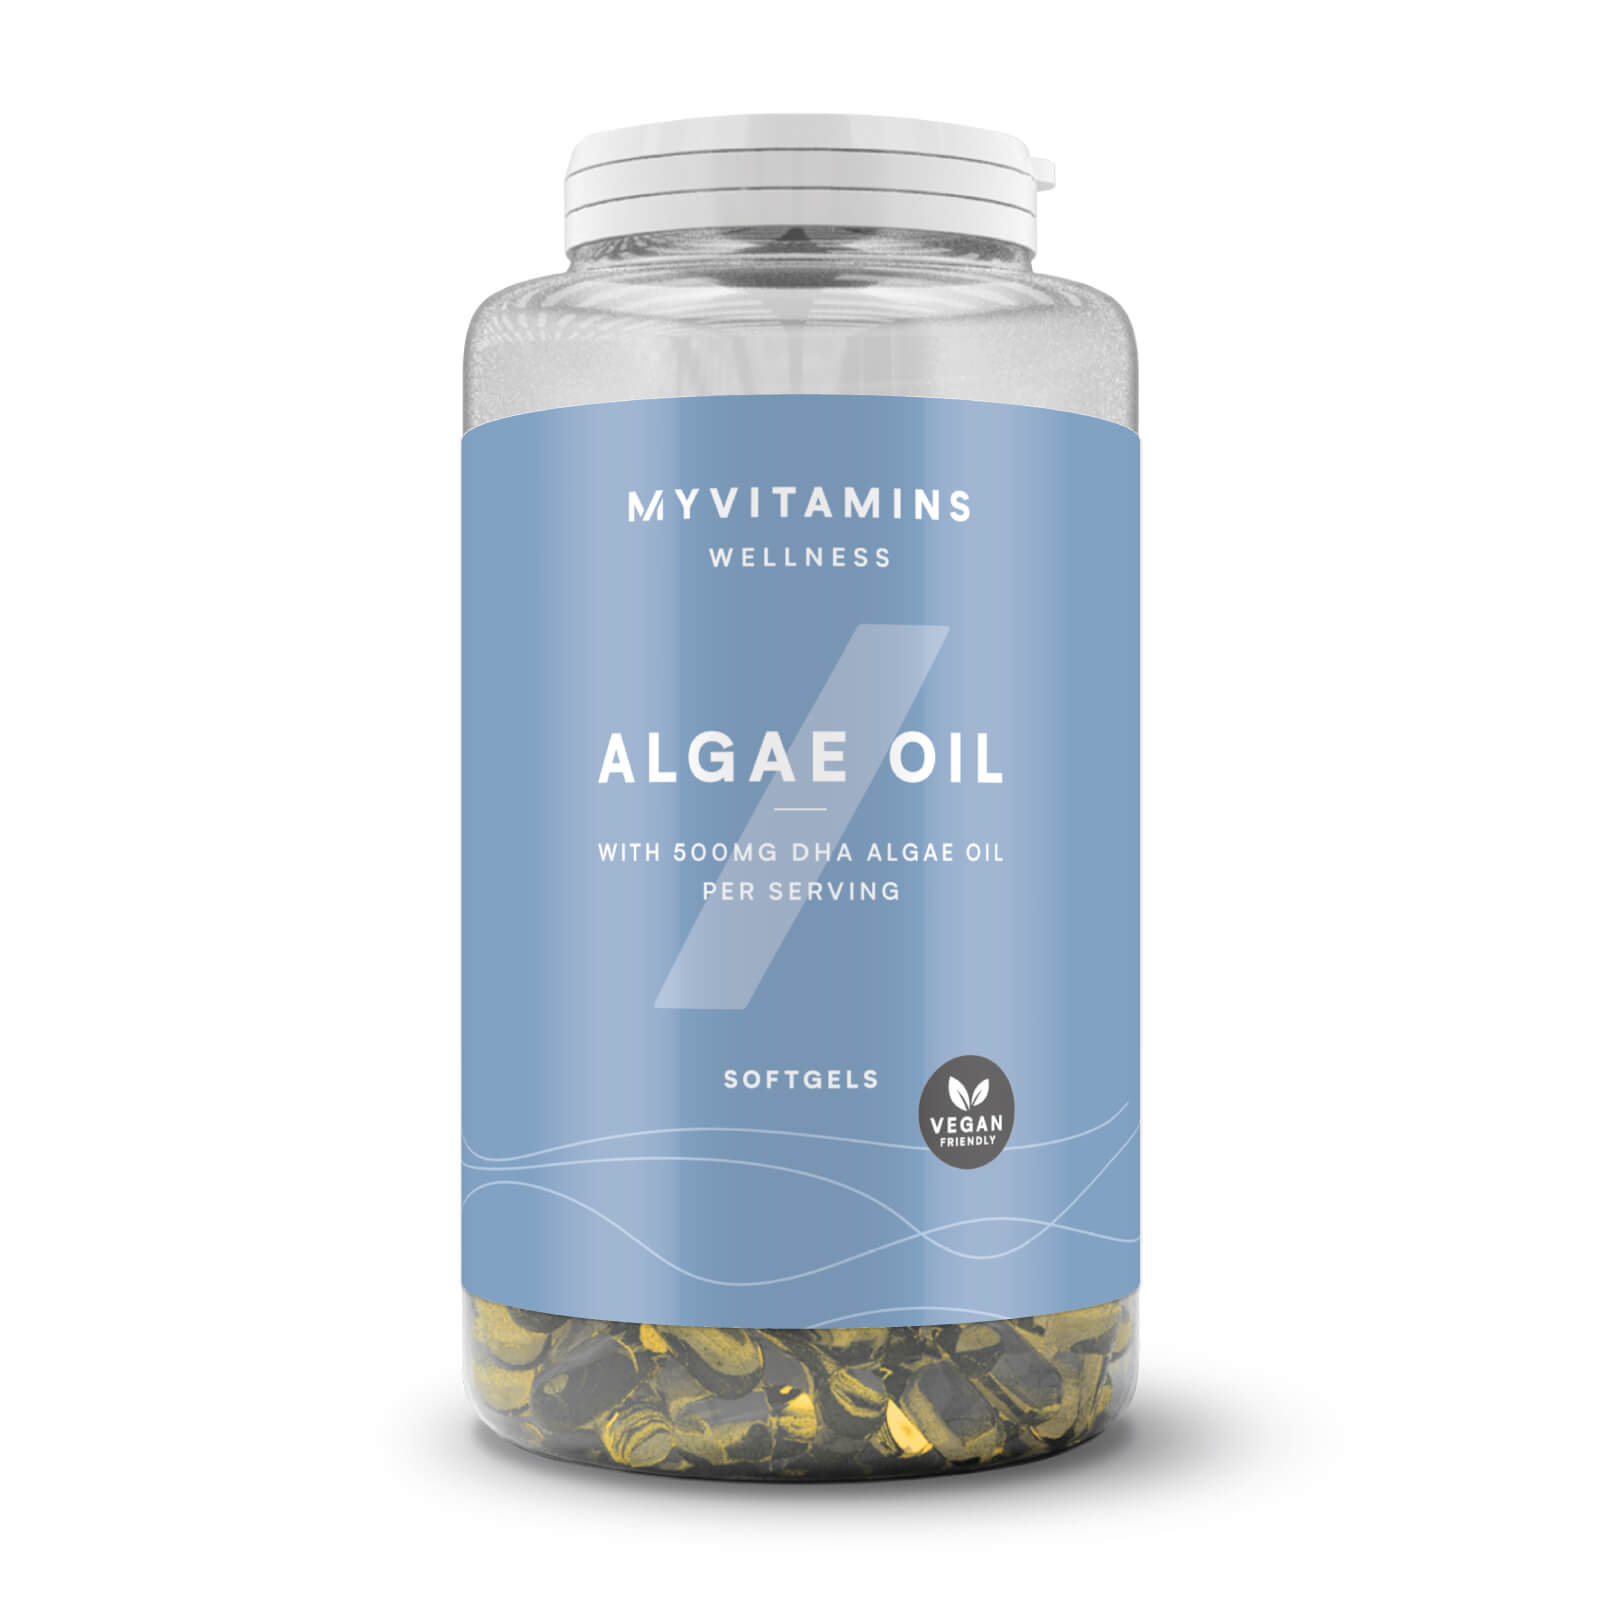 Myvitamins Algae Oil - 90Softgel